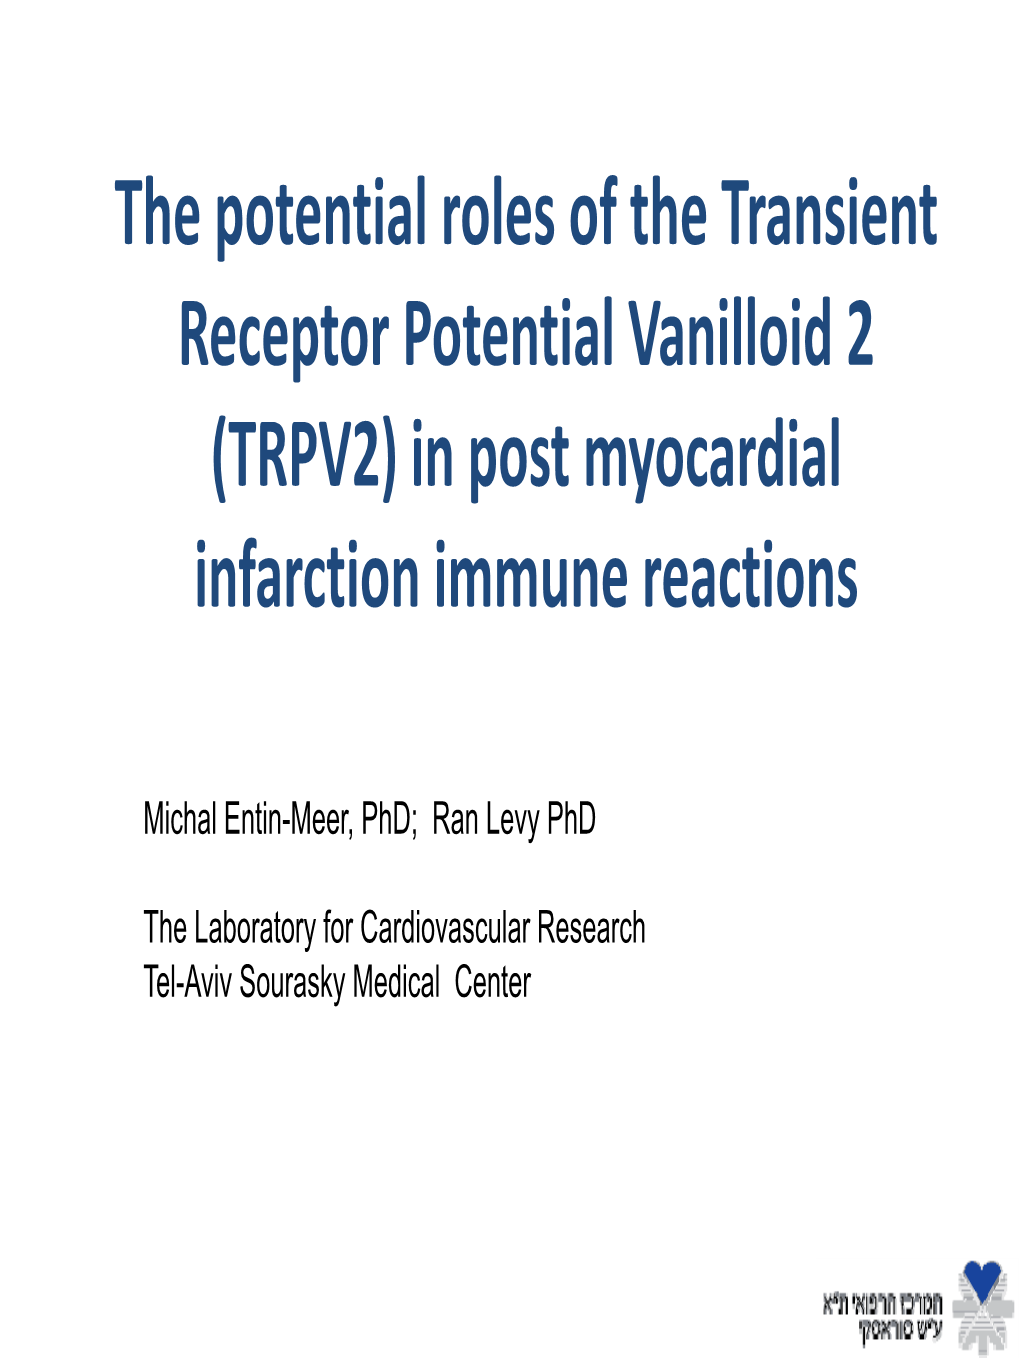 TRPV2) in Post Myocardial Infarction Immune Reactions